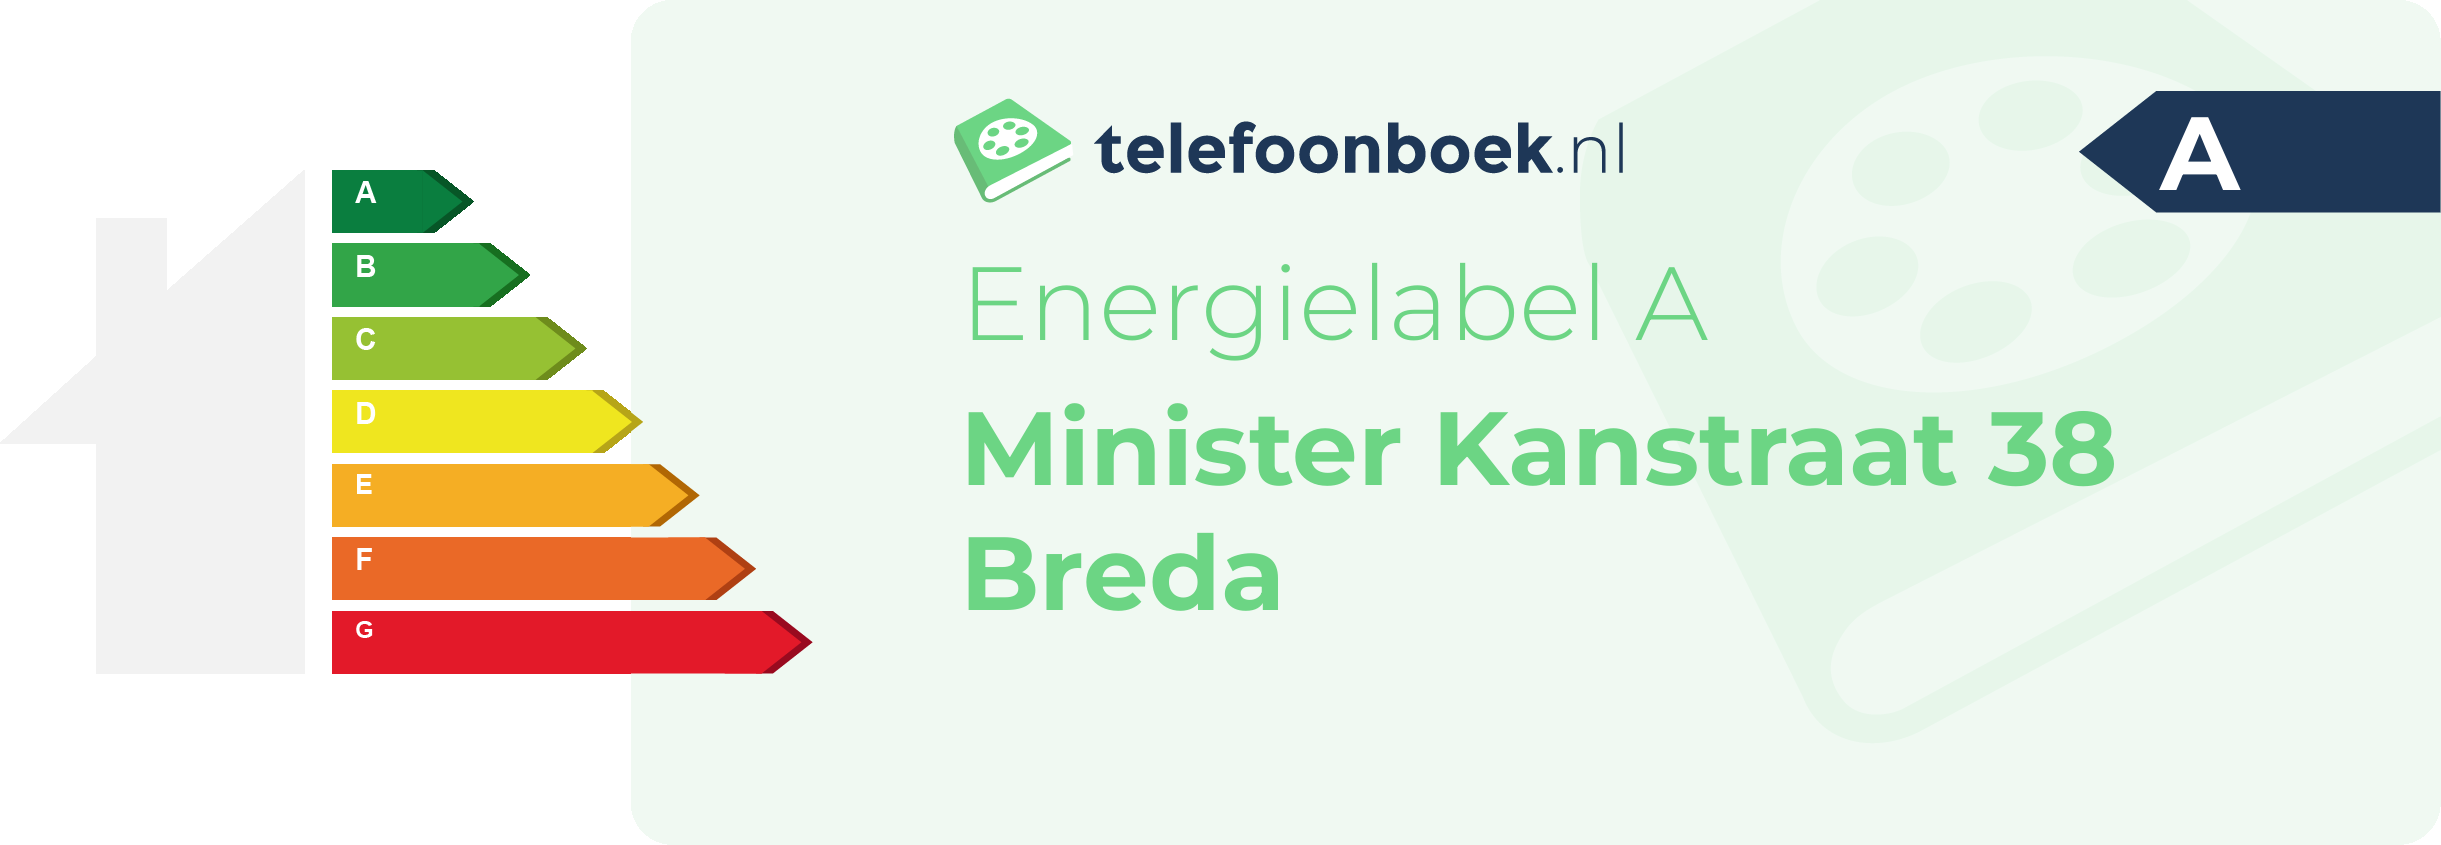 Energielabel Minister Kanstraat 38 Breda